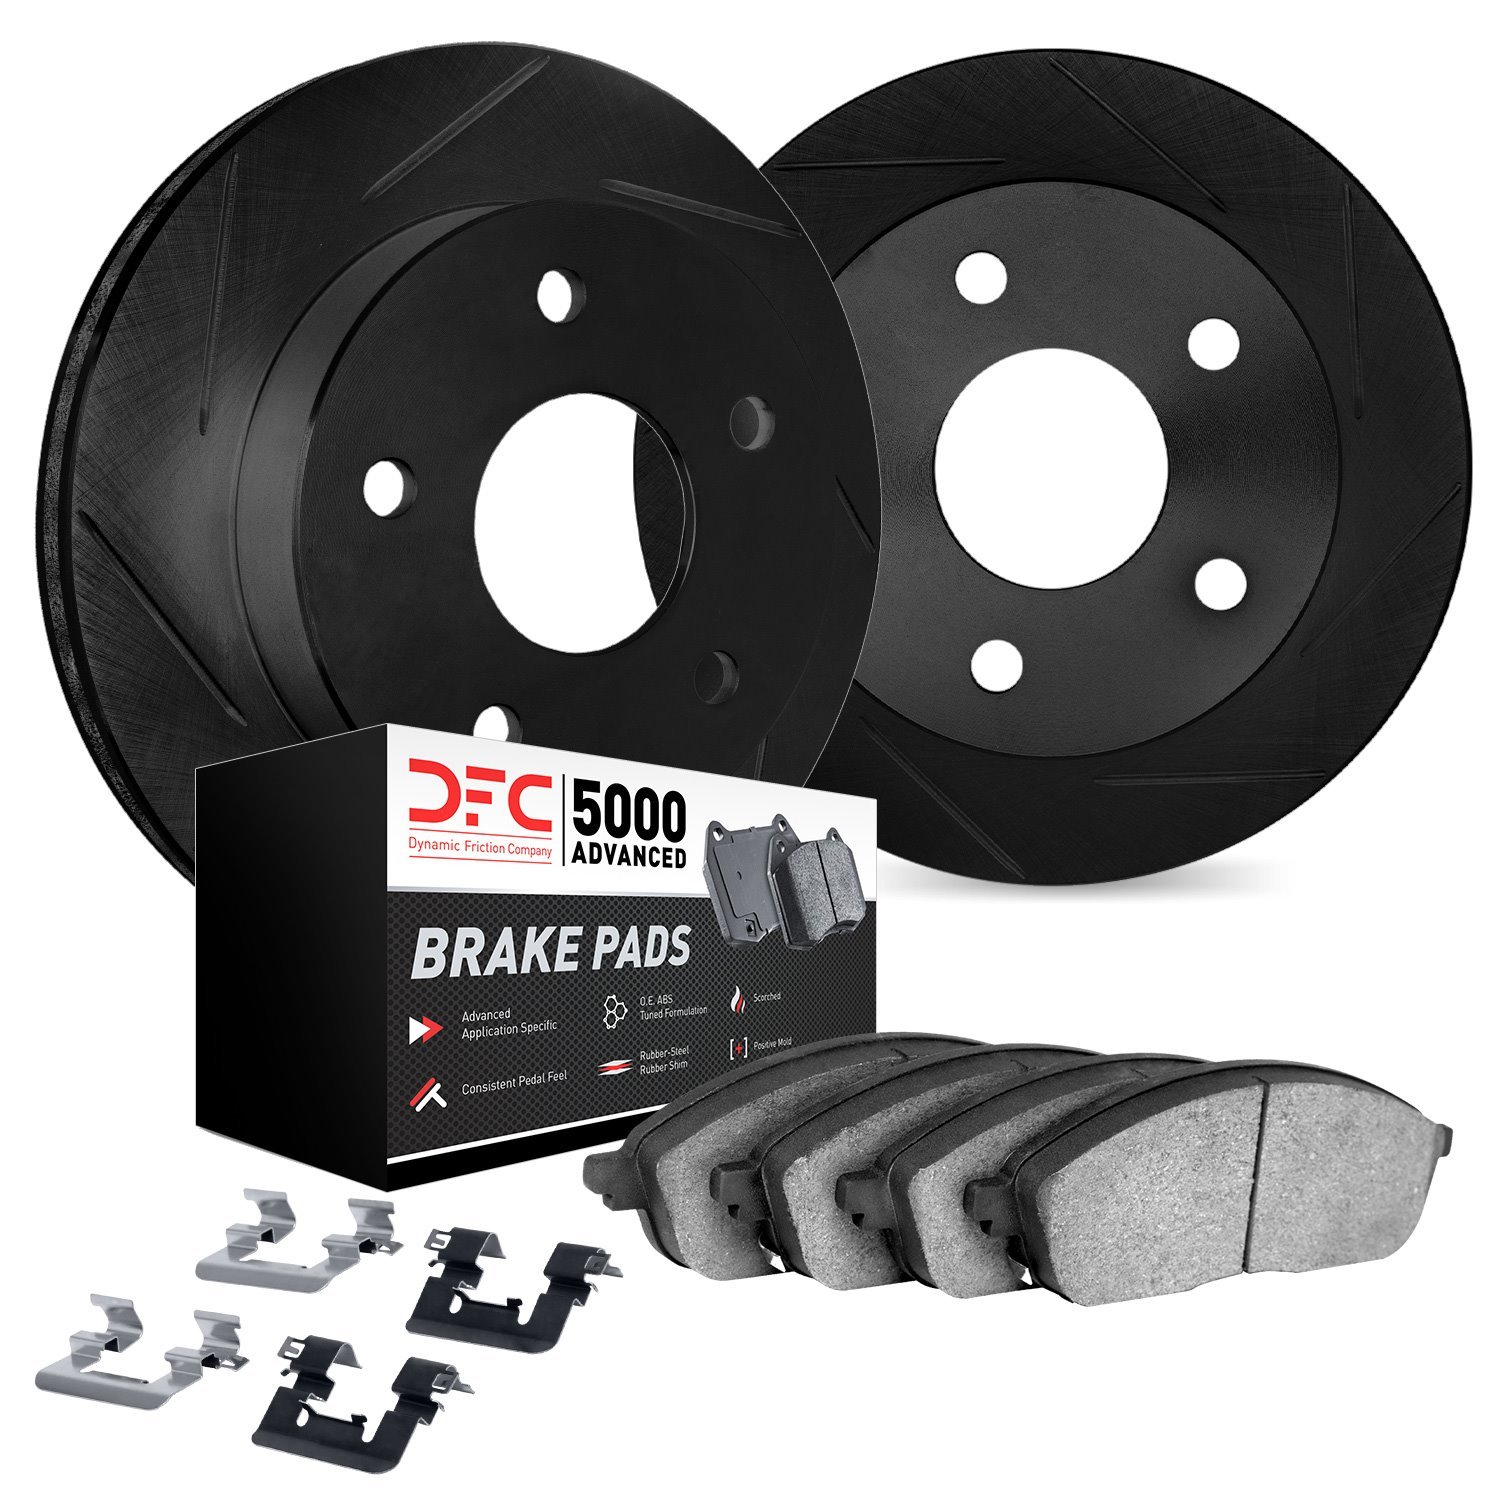 3512-80066 Slotted Brake Rotors w/5000 Advanced Brake Pads Kit & Hardware [Black], 2007-2012 Ford/Lincoln/Mercury/Mazda, Positio